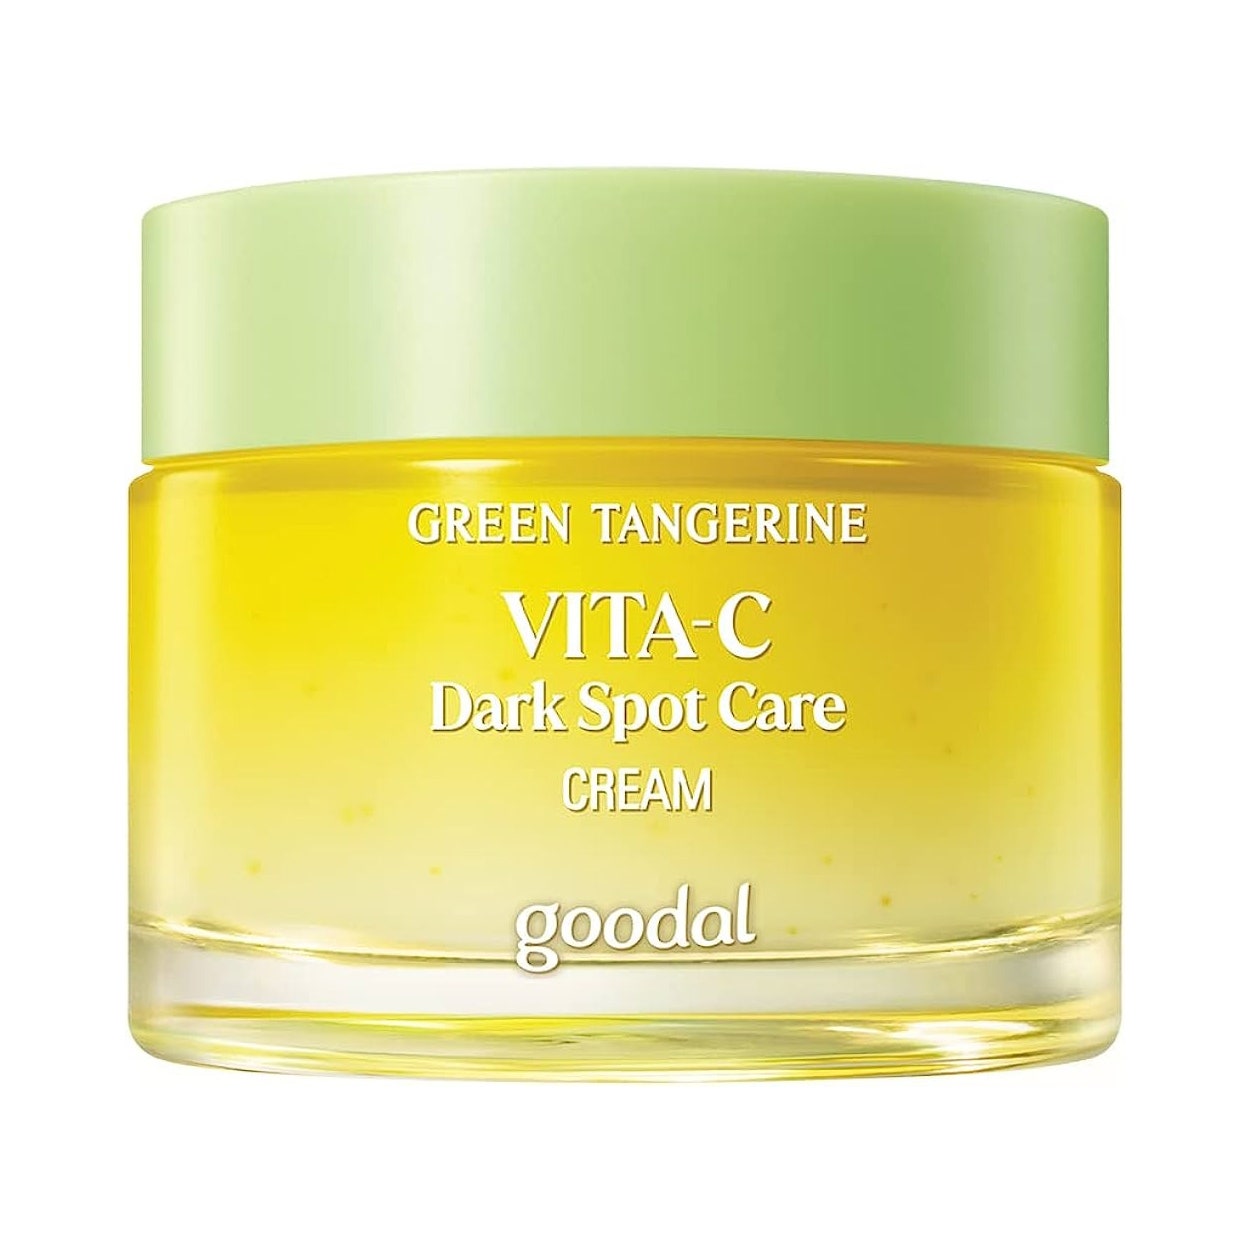 Goodal Green Tangerine Vita C Dark Spot Care Cream yellow jar with light green lid on white background